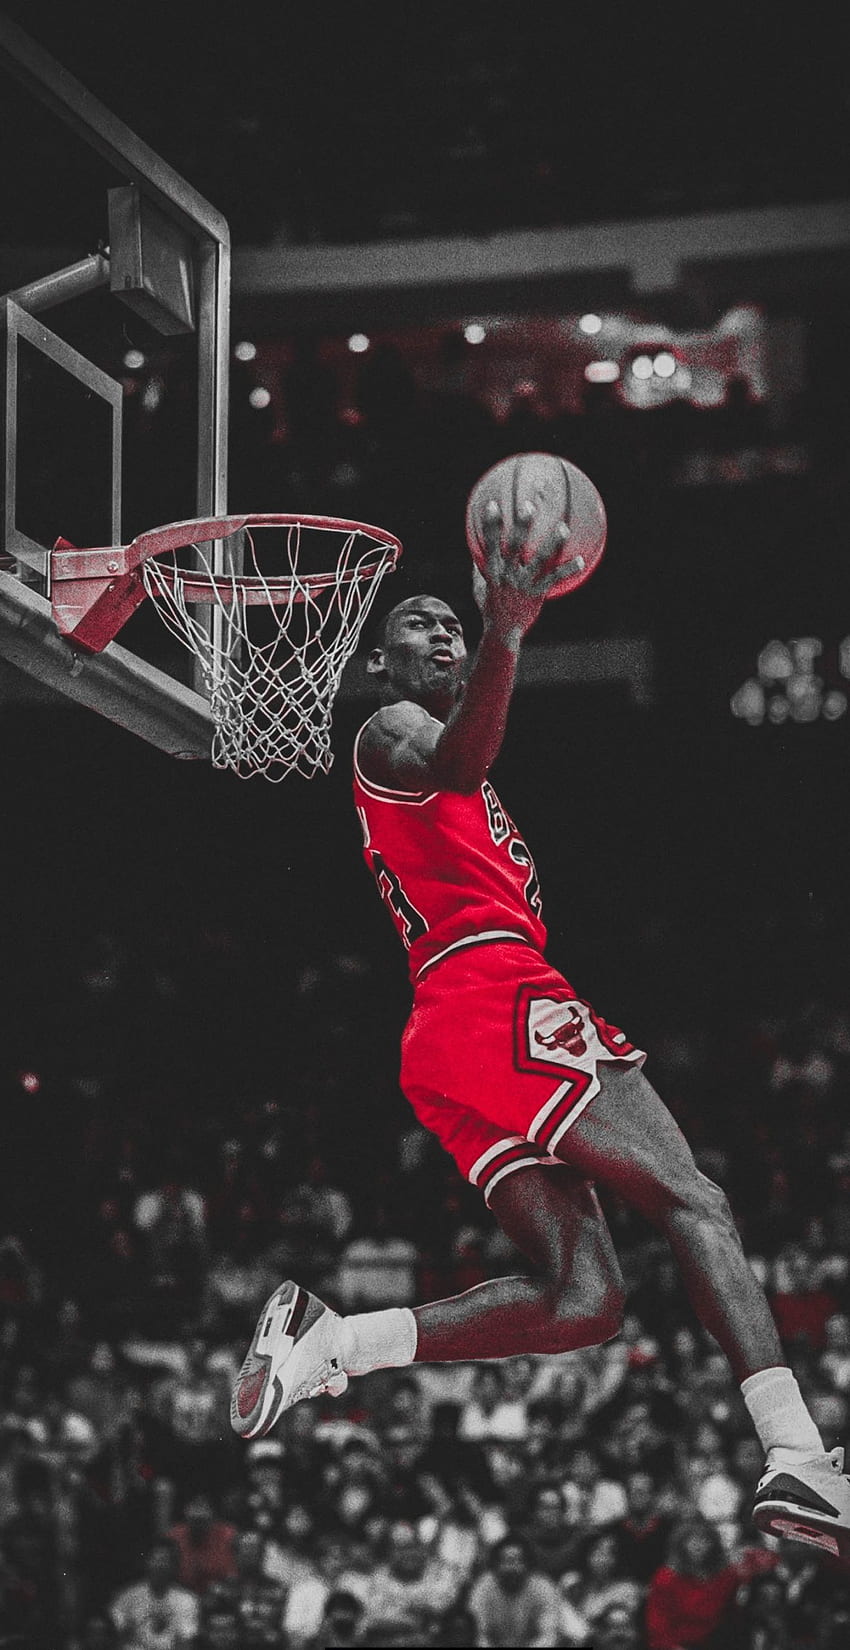 IPhone wallpaper of Michael Jordan, one of the best basketball players of all time - Michael Jordan